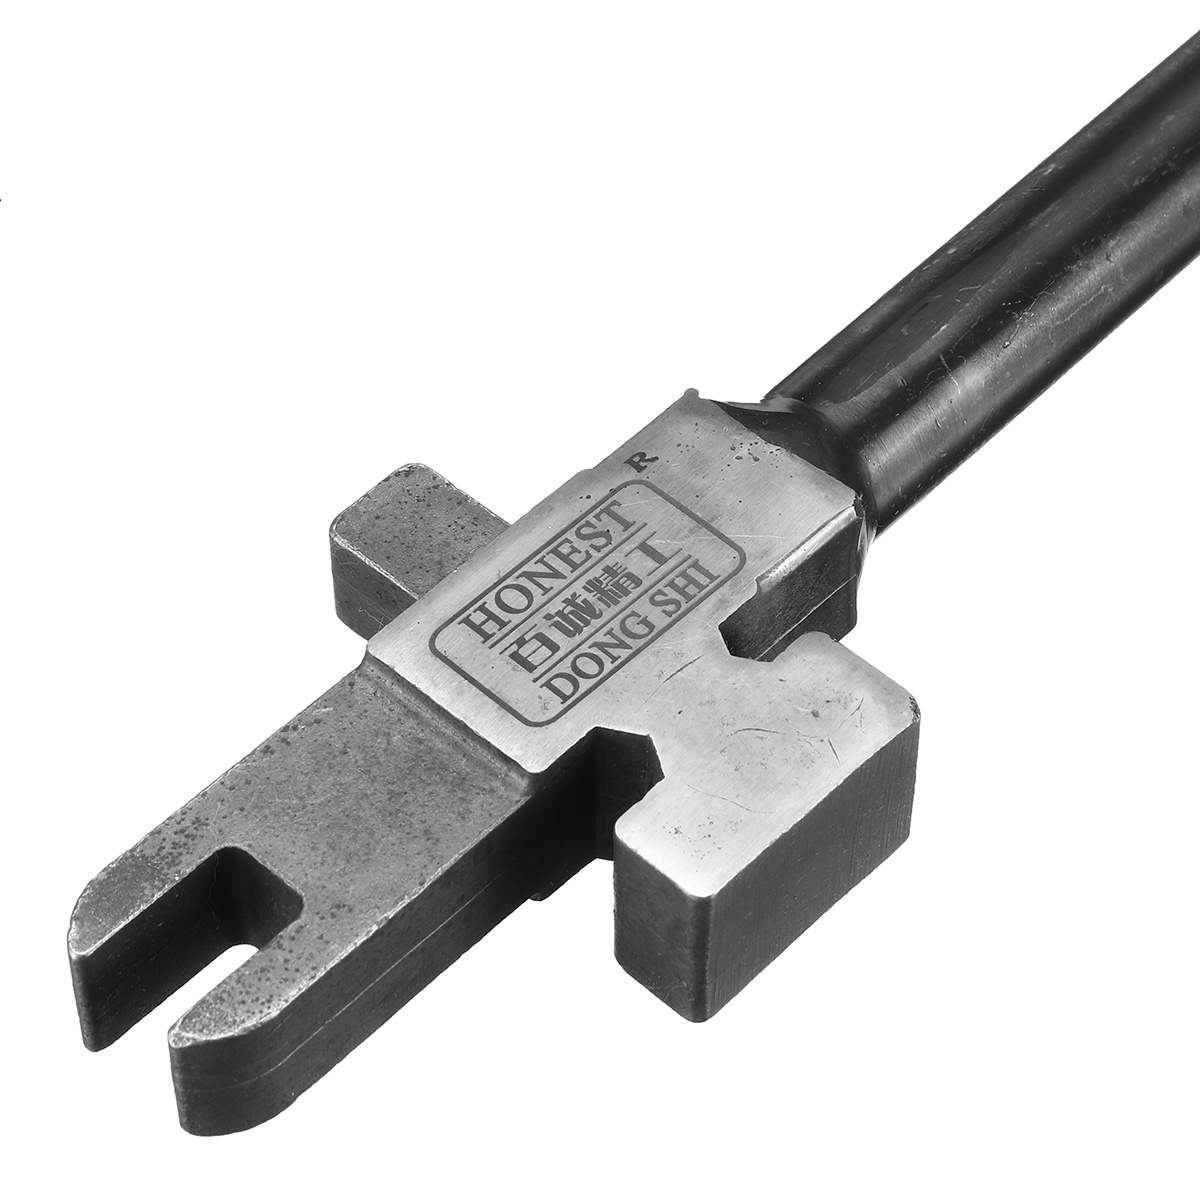 Locksmith-Supplies-Locksmith-Repair-Tools-Emergency-Lock-Cylinder-5-in-1-Twist-off-Consumables-1871446-5